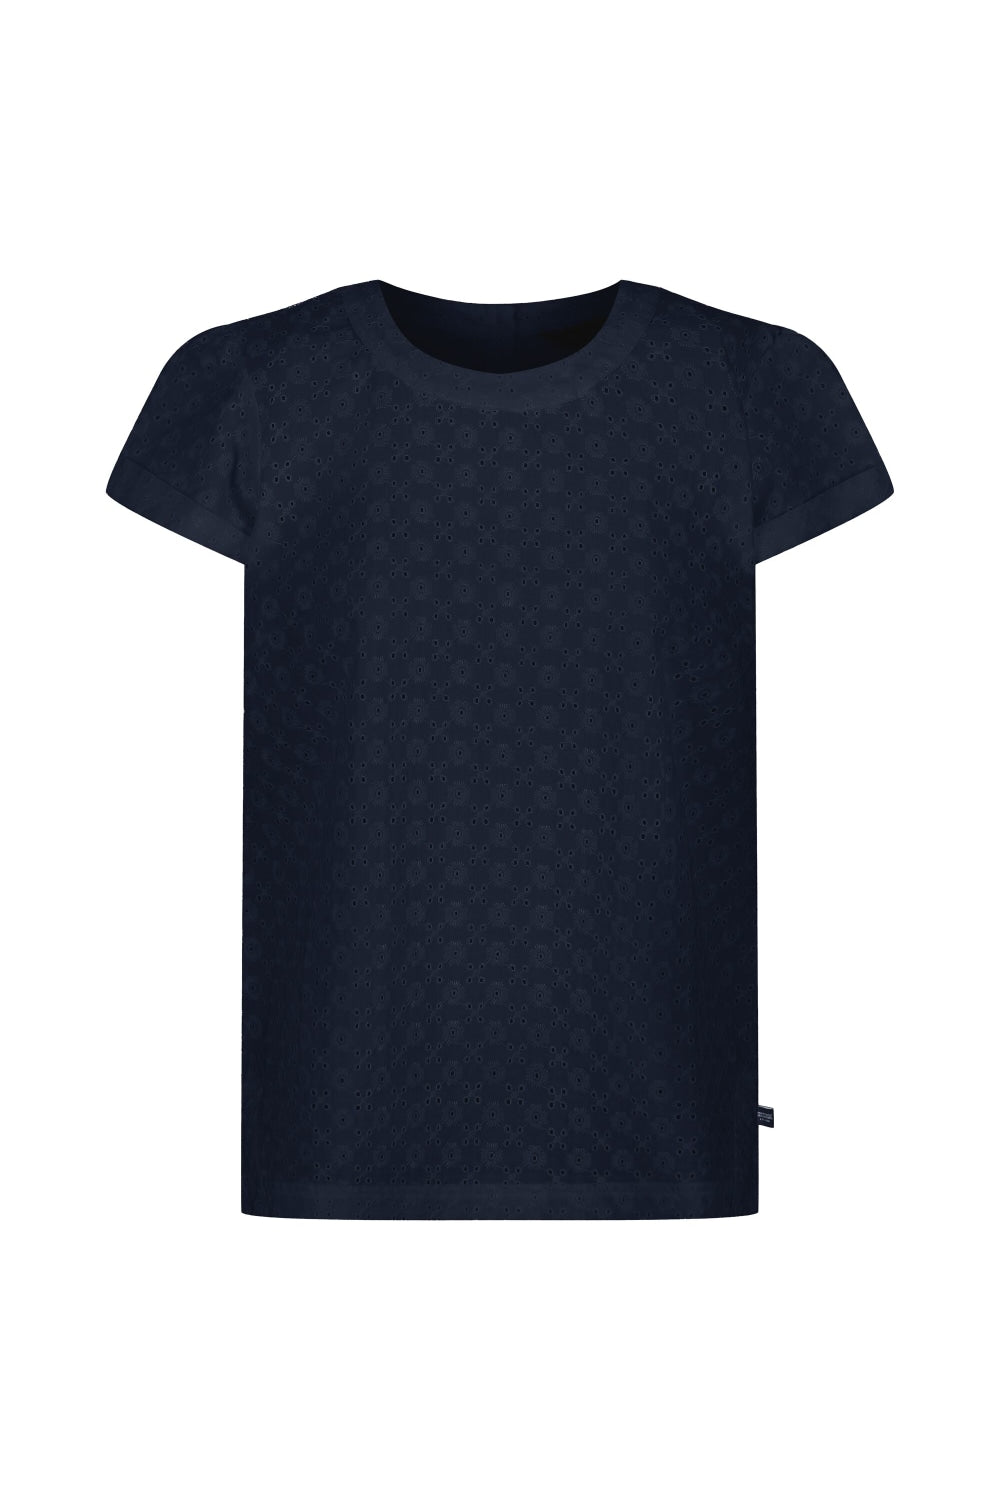 Regatta Womens/Ladies Jaelynn T-Shirt